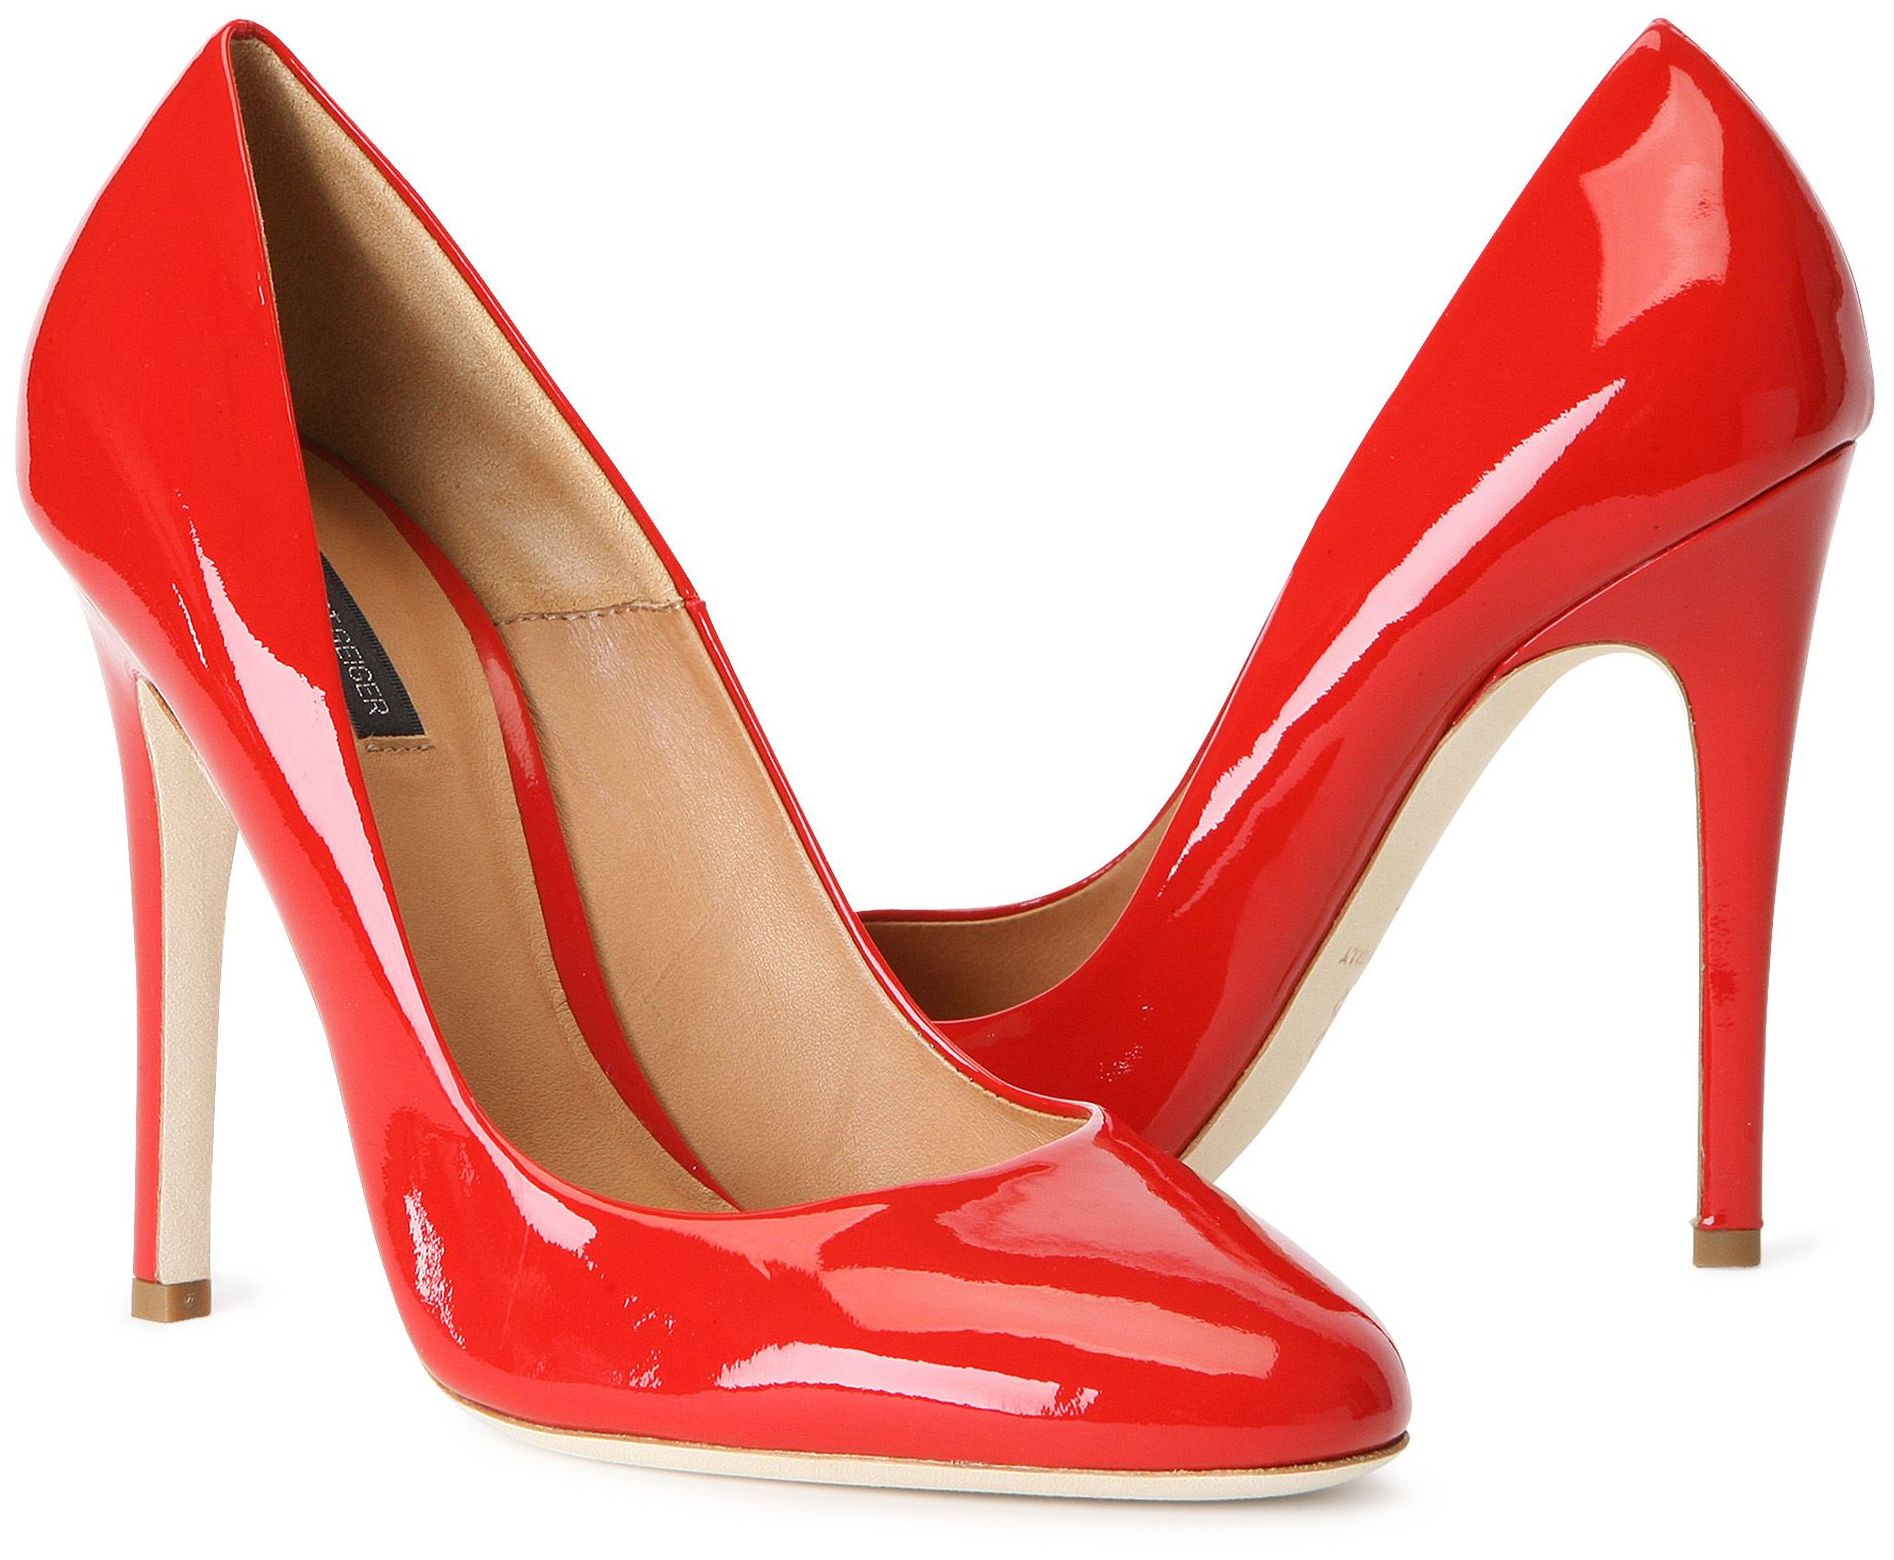 Blackmoor Vituperative » How to walk in stiletto heels